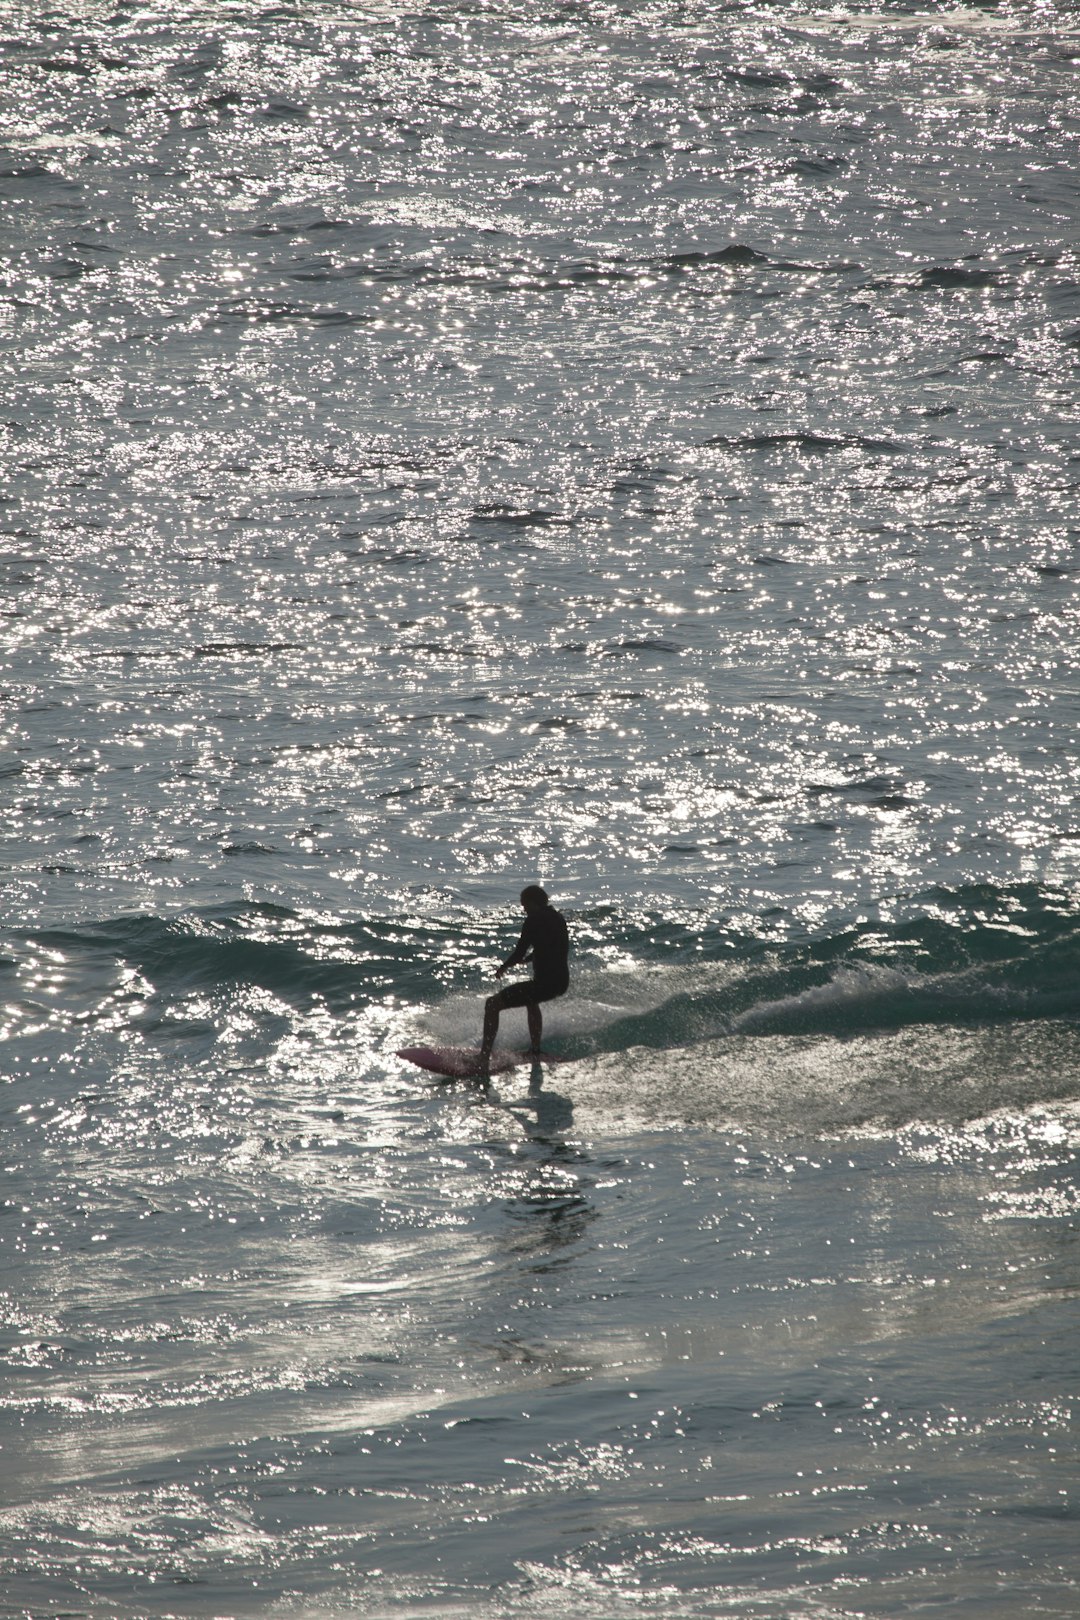 Surfing photo spot Tamarama Beach Sydney